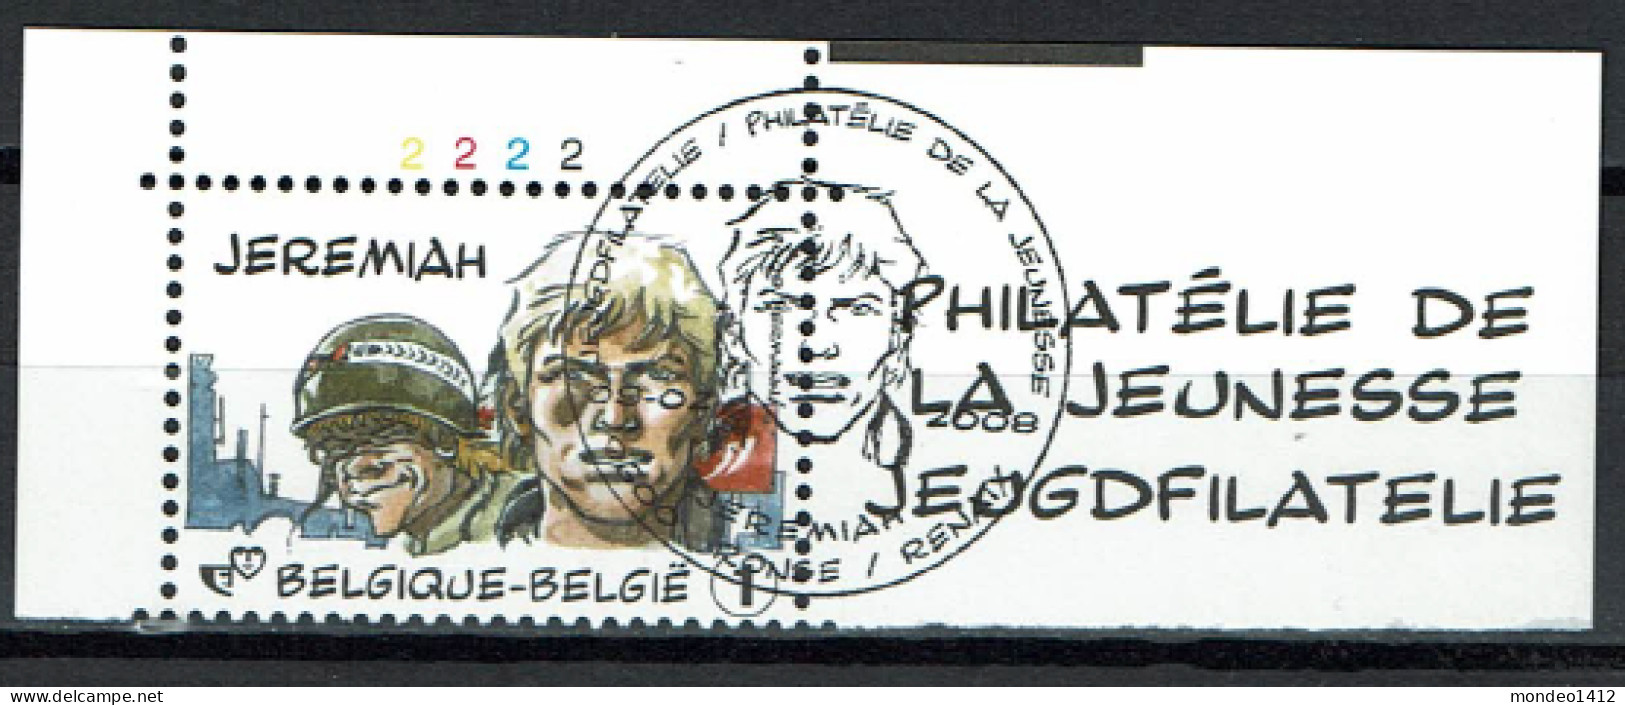 België OBP 3752 - Comics - Strips - BD - Jeremiah - Used Stamps